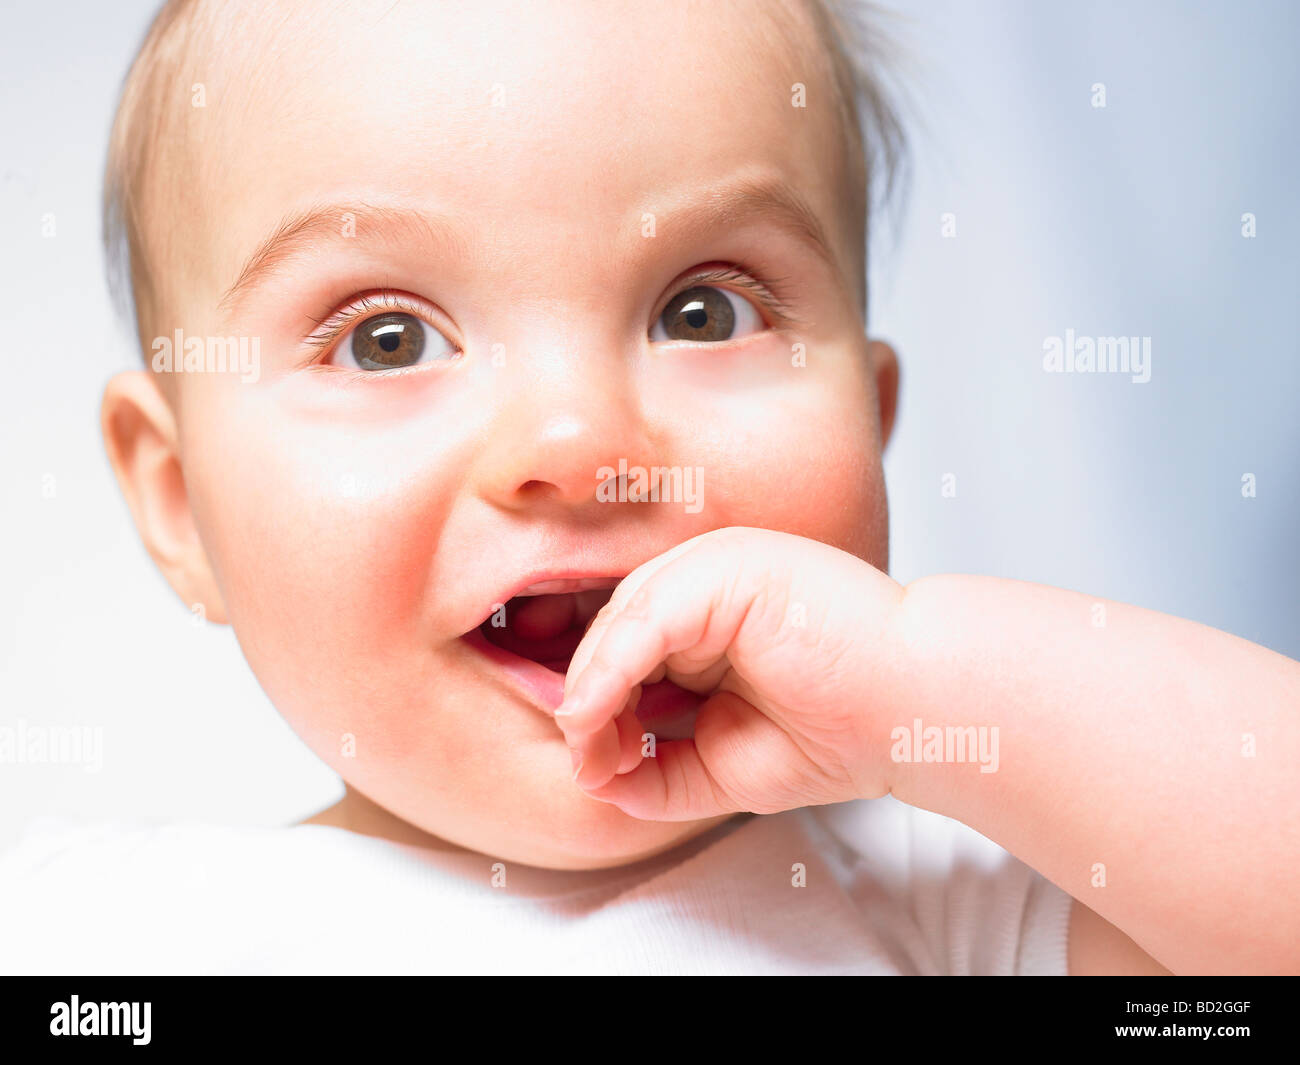 Portrait of a baby smiling Banque D'Images